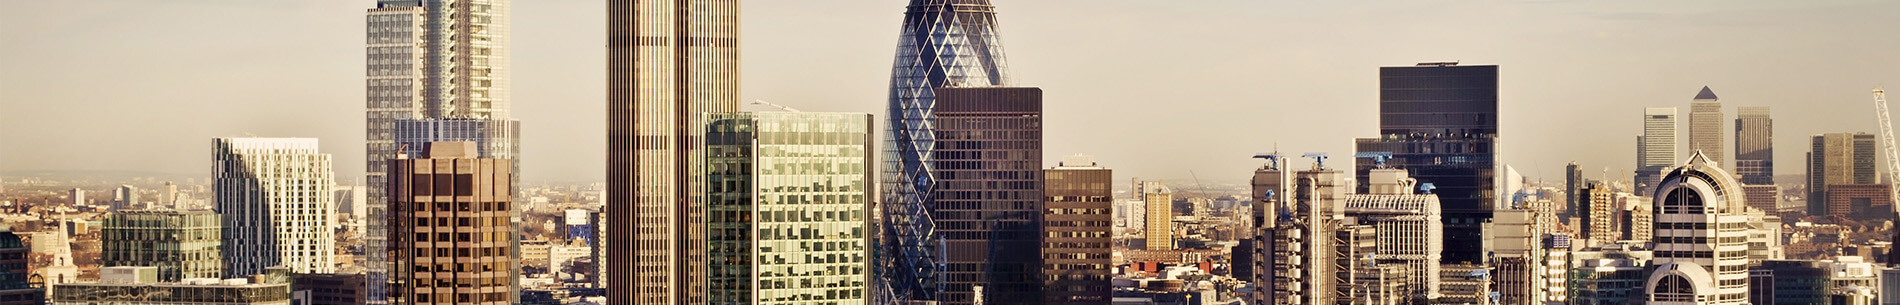 london skyline banner